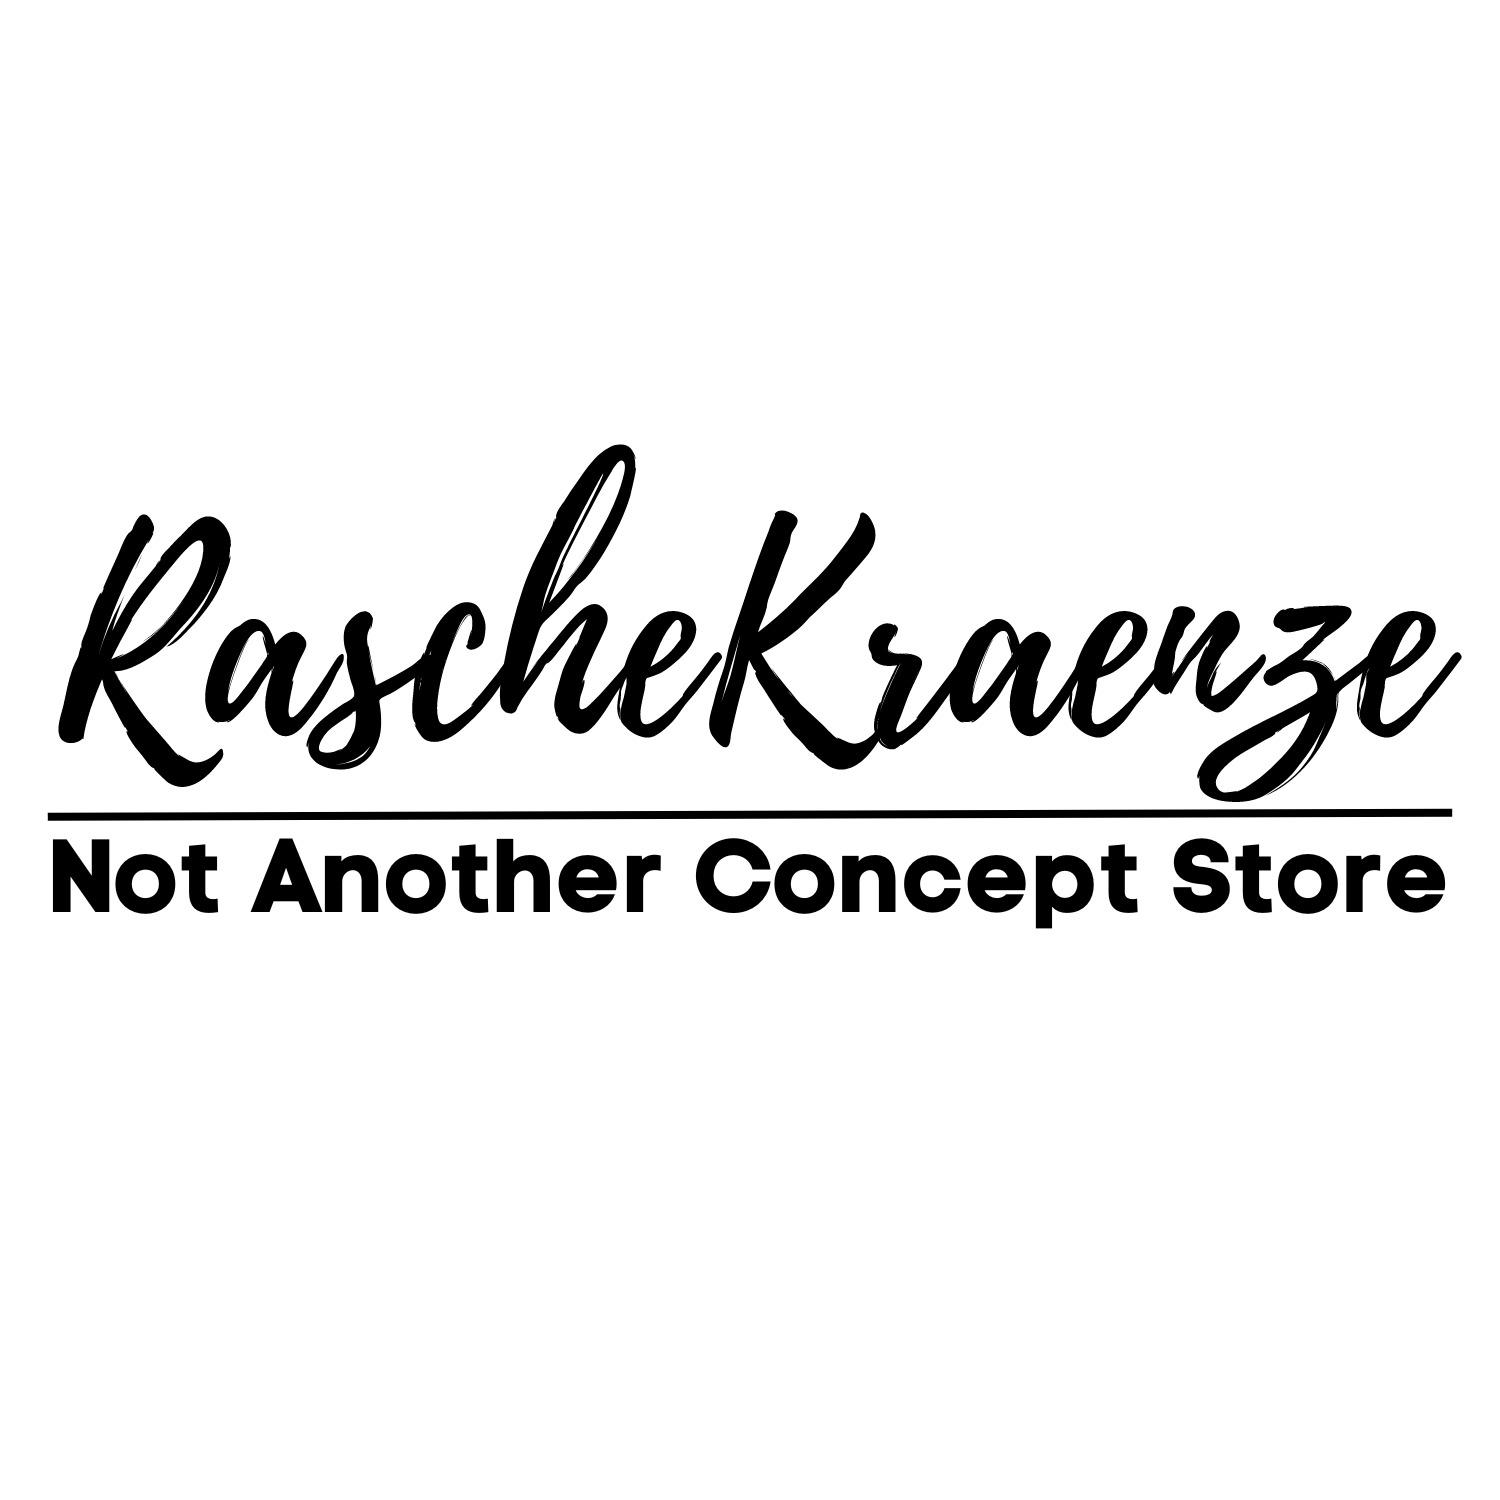 RascheKraenze - Not Another Concept Store Inh. Pia Rasch  